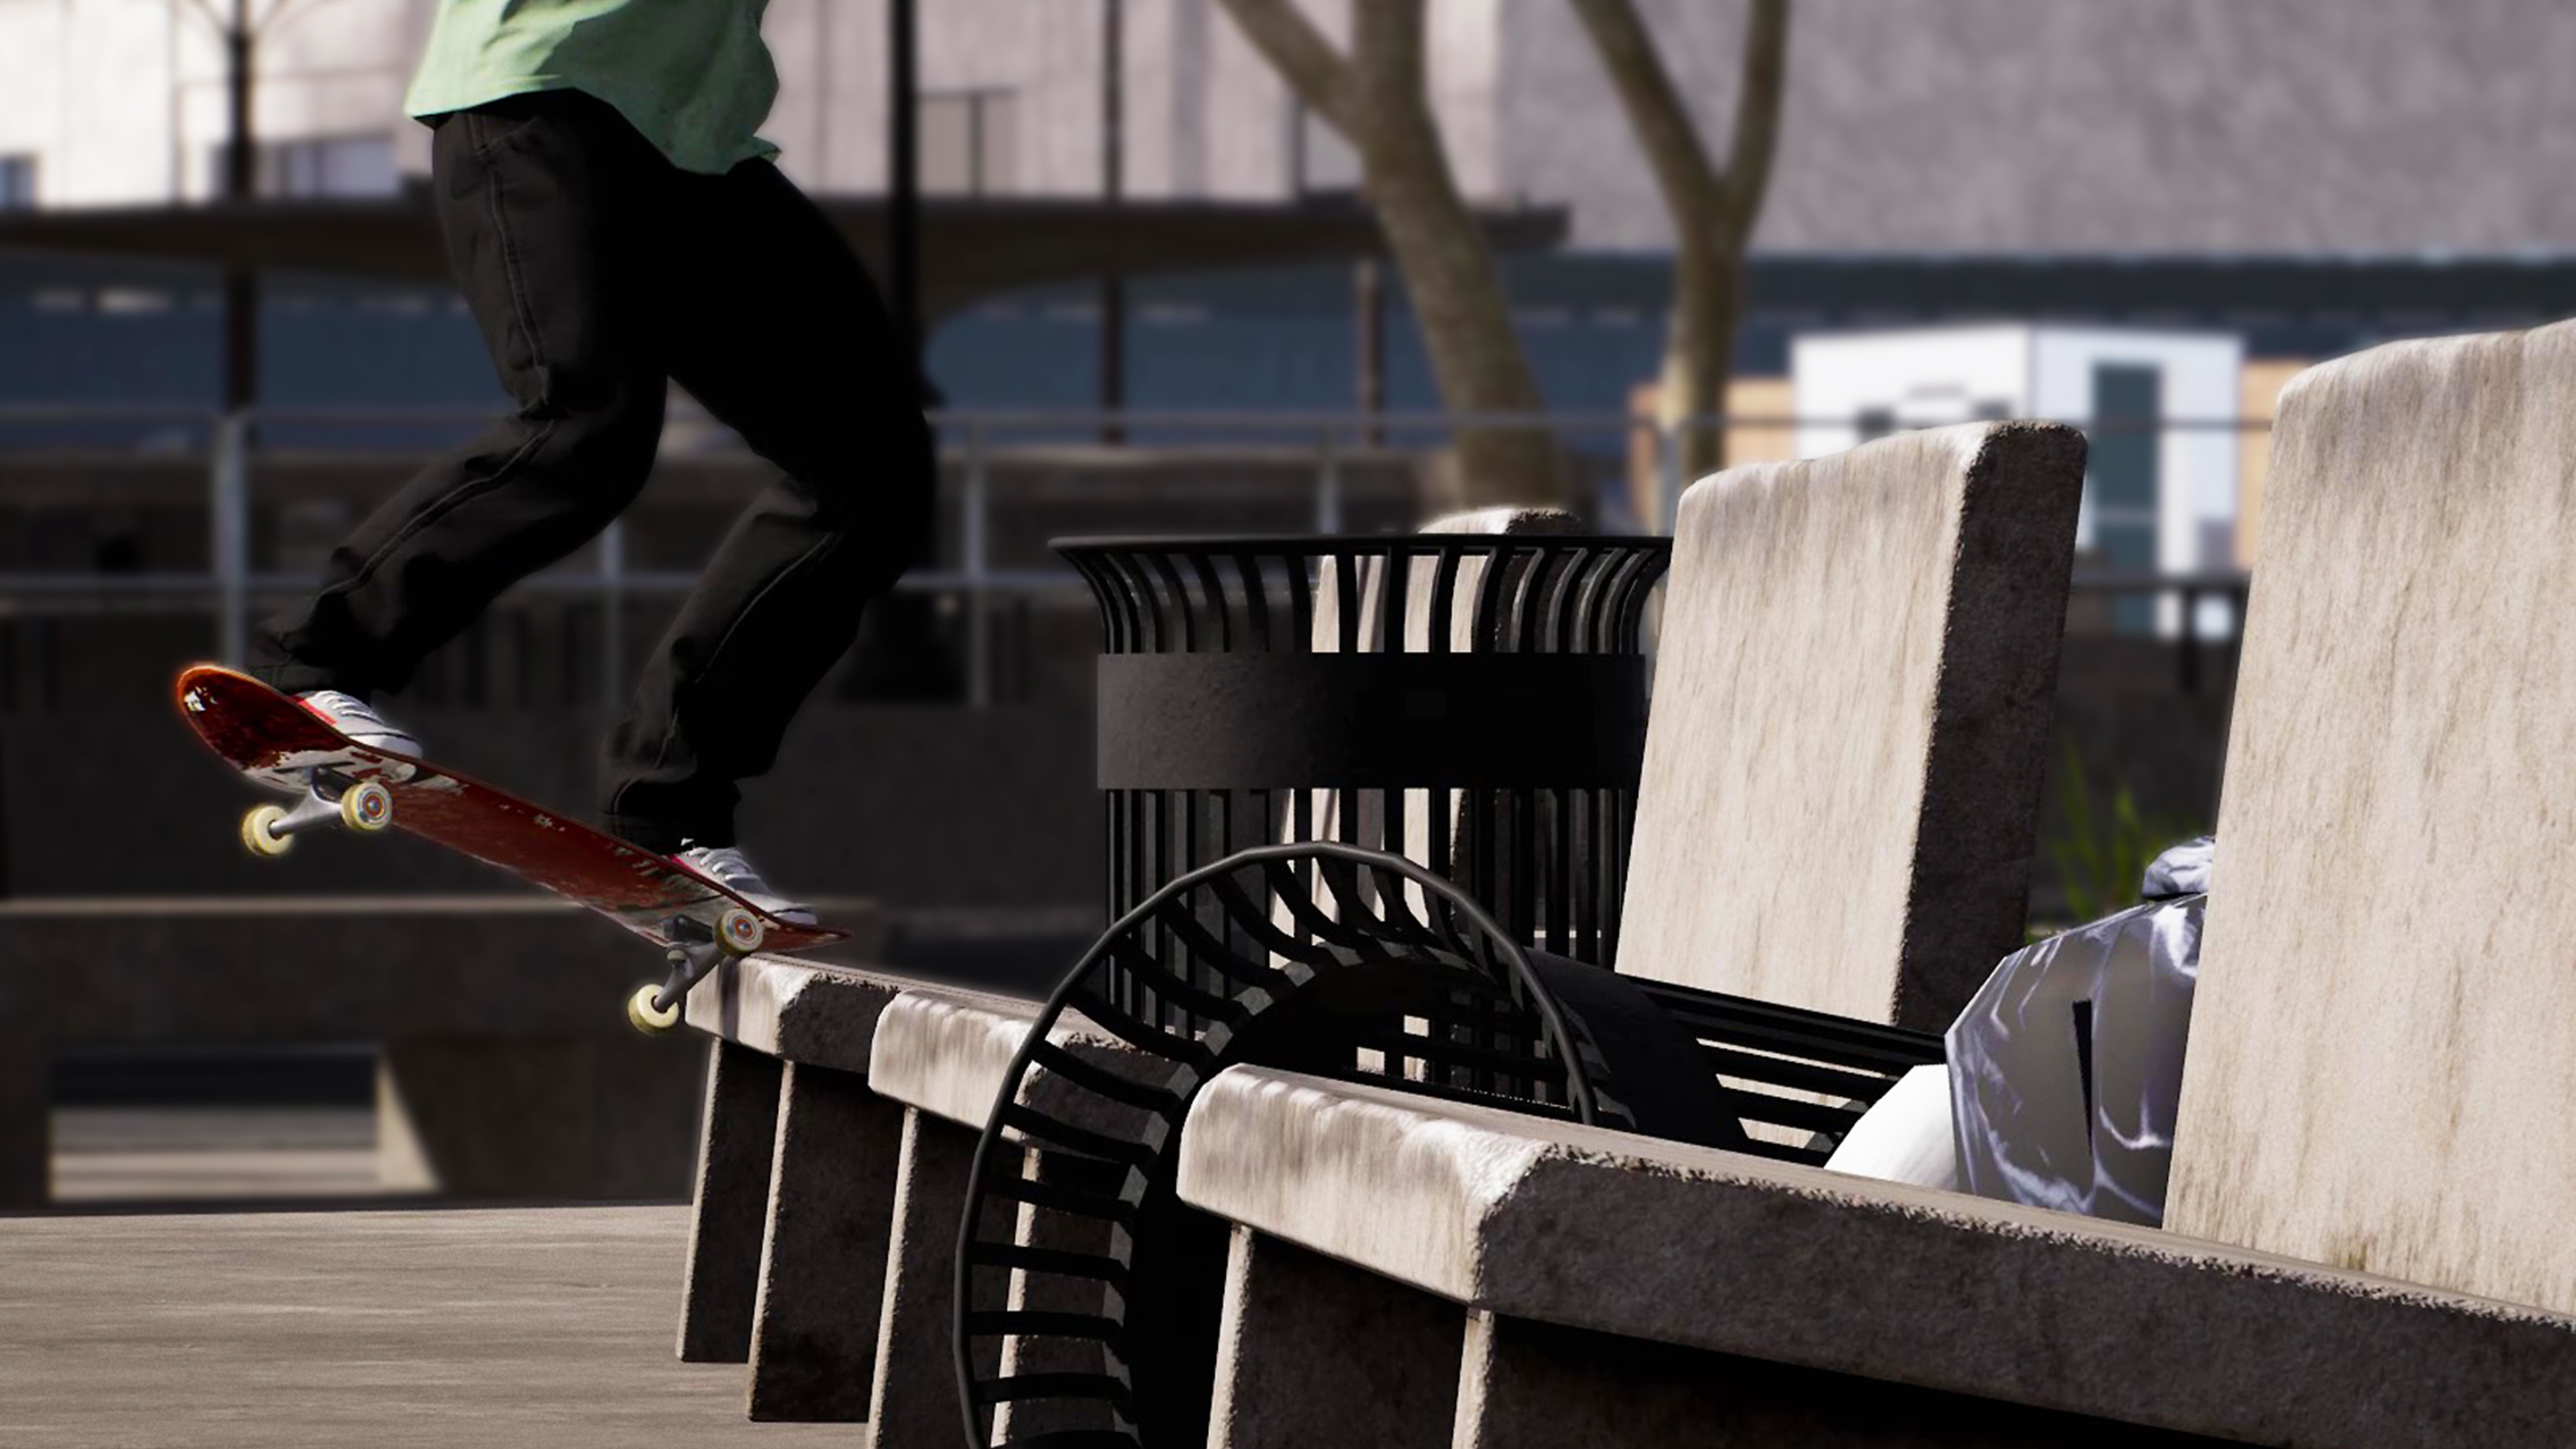 Session: Skate Sim screenshot showing a skater grinding a bench